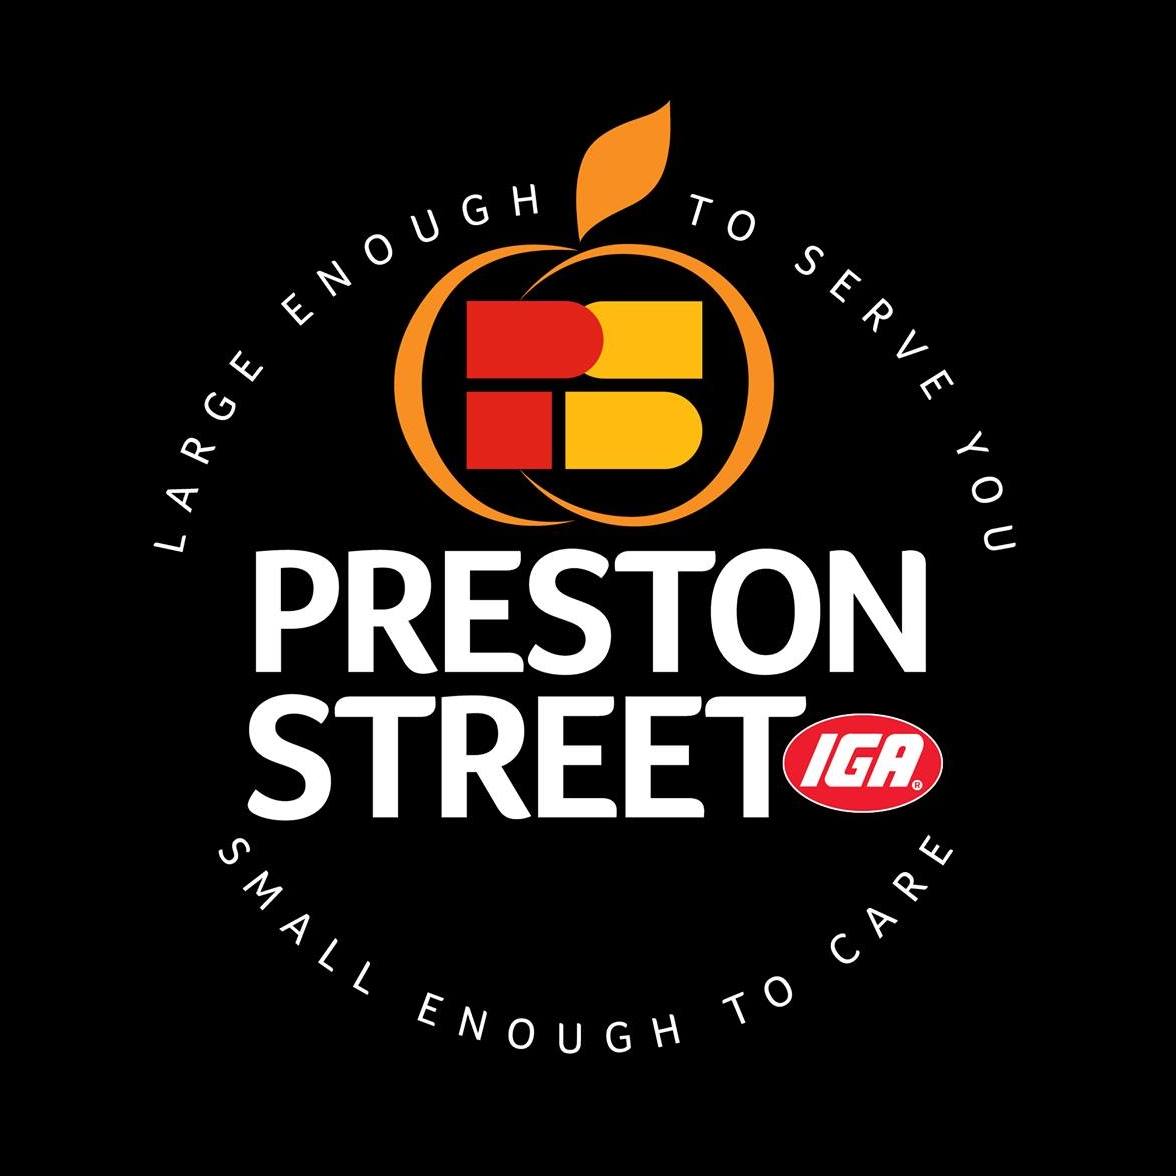 Preston Street IGA logo